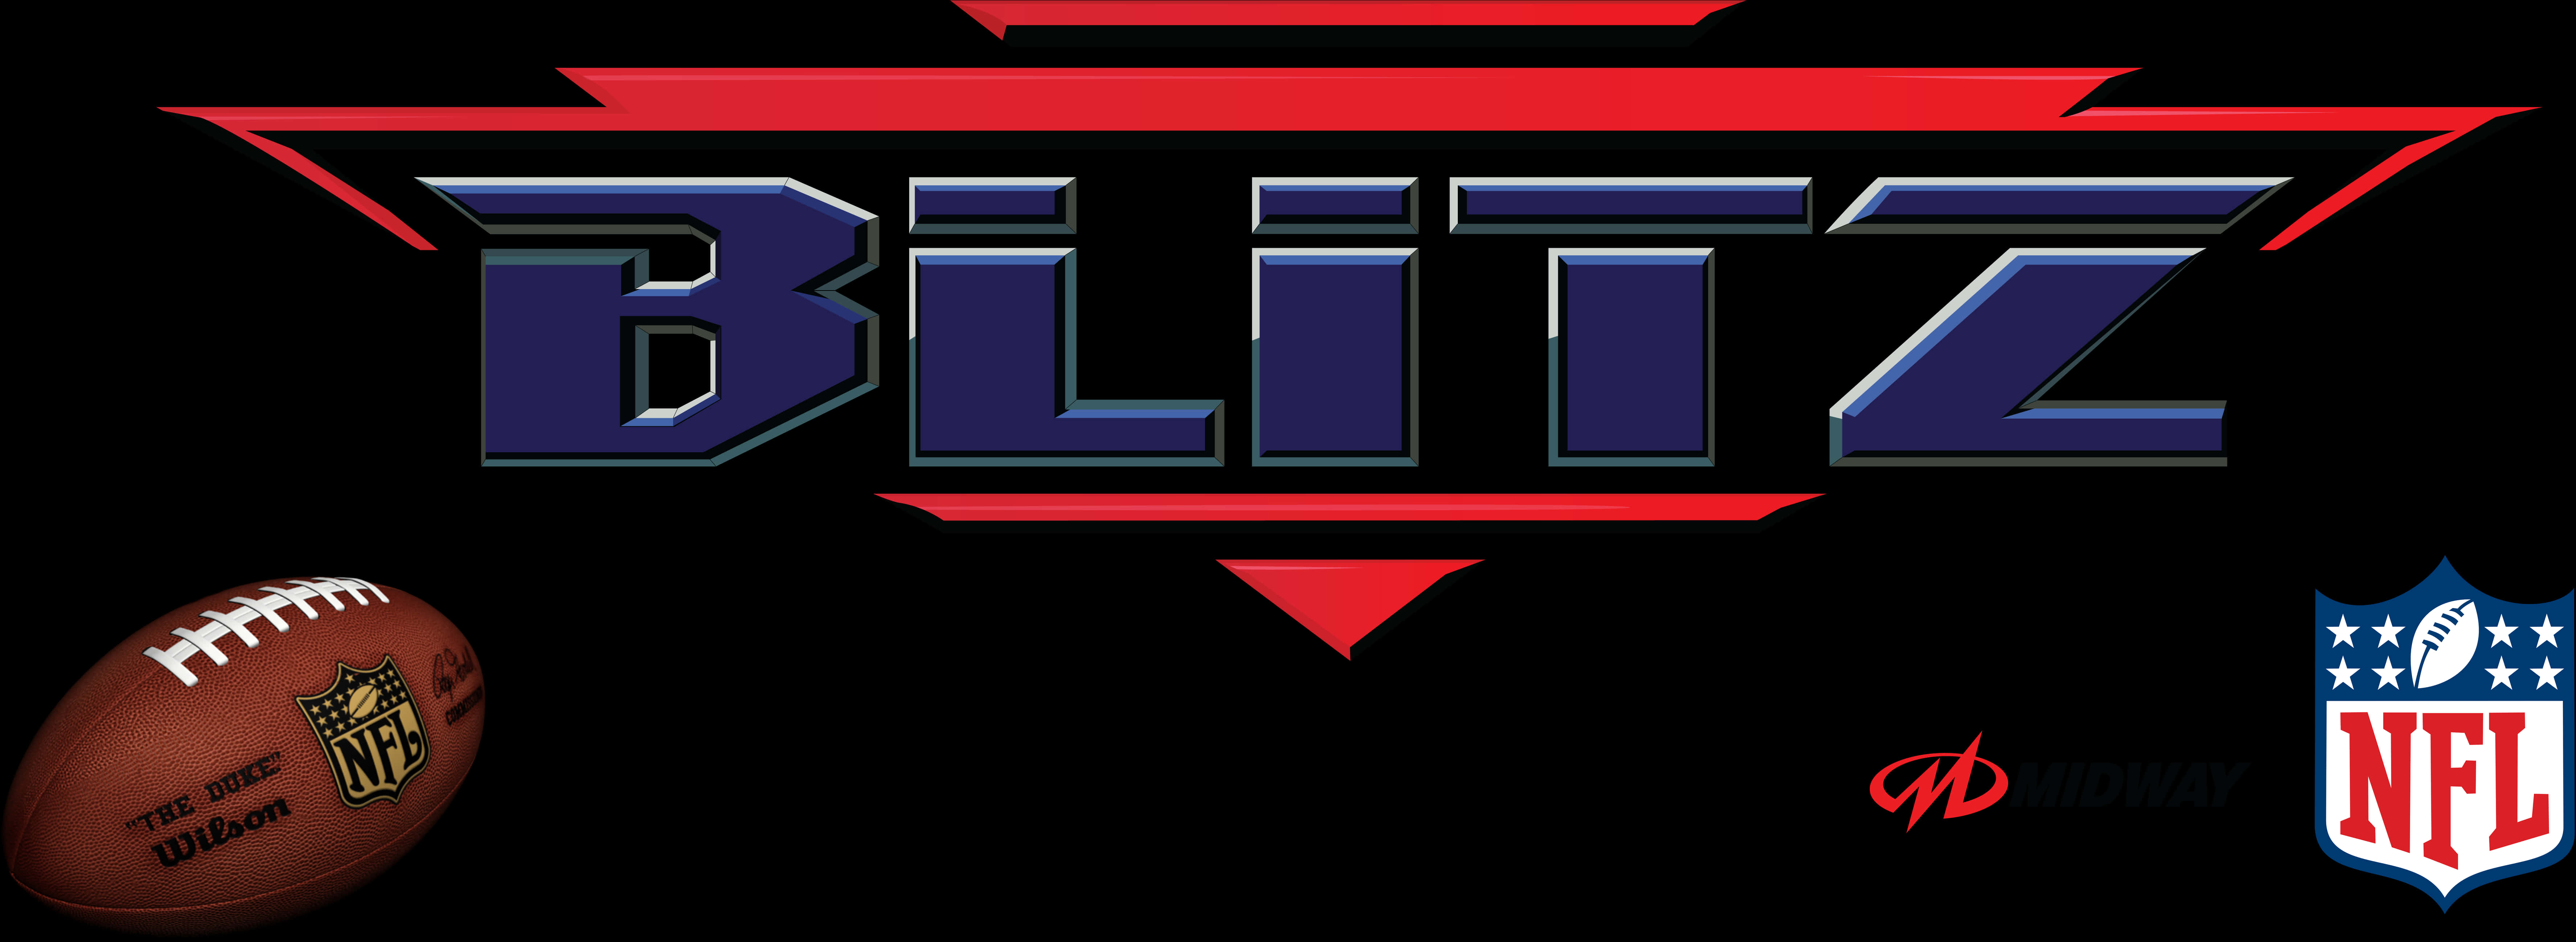 N F L Blitz Logowith Footballand N F L Shield PNG image